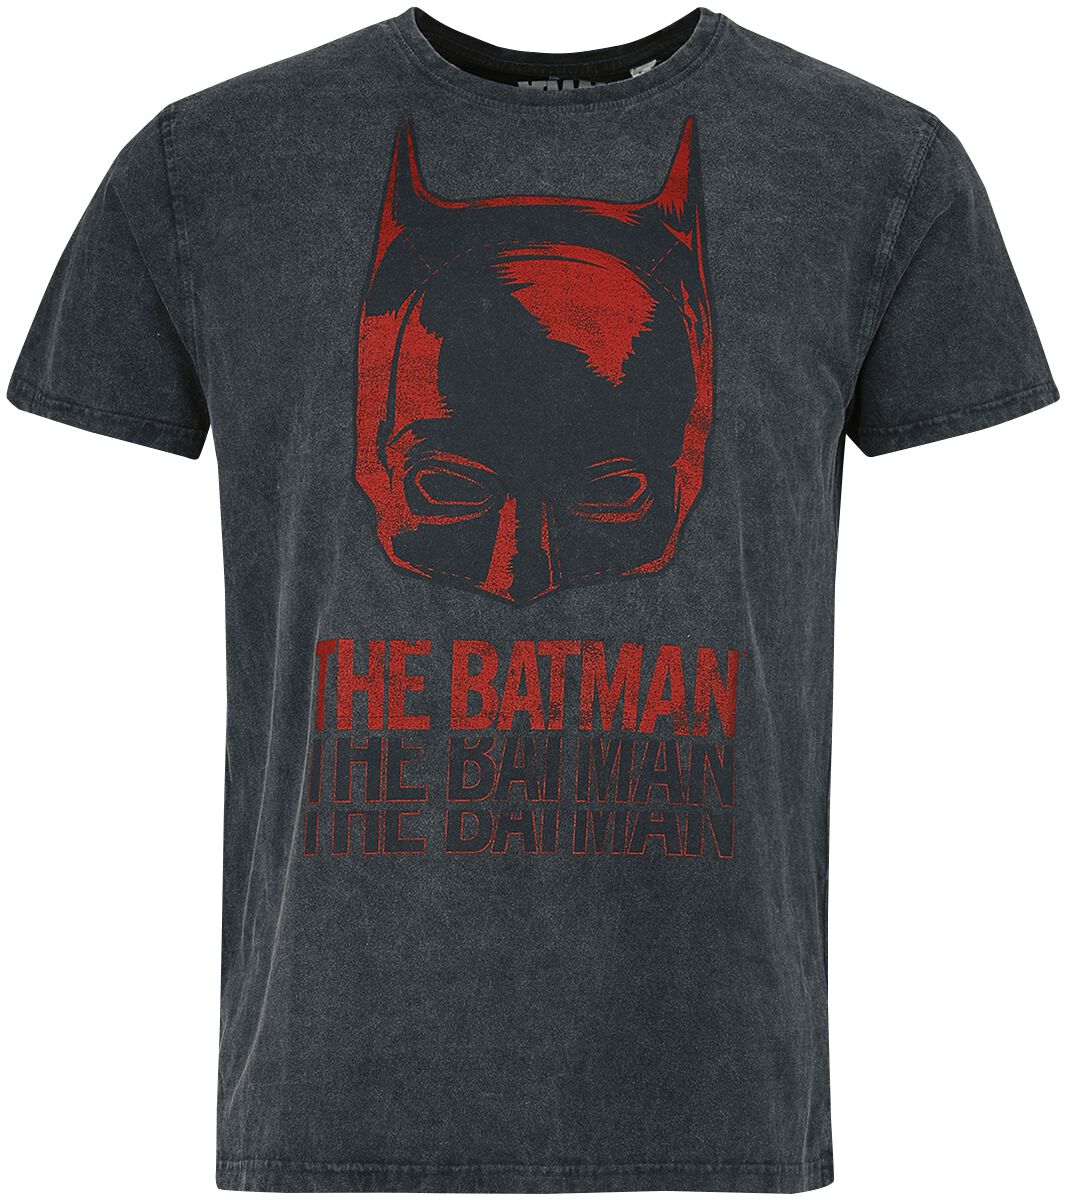 Batman - DC Comics T-Shirt - The Batman - Mask - S bis XXL - für Männer - Größe S - schwarz  - Lizenzierter Fanartikel